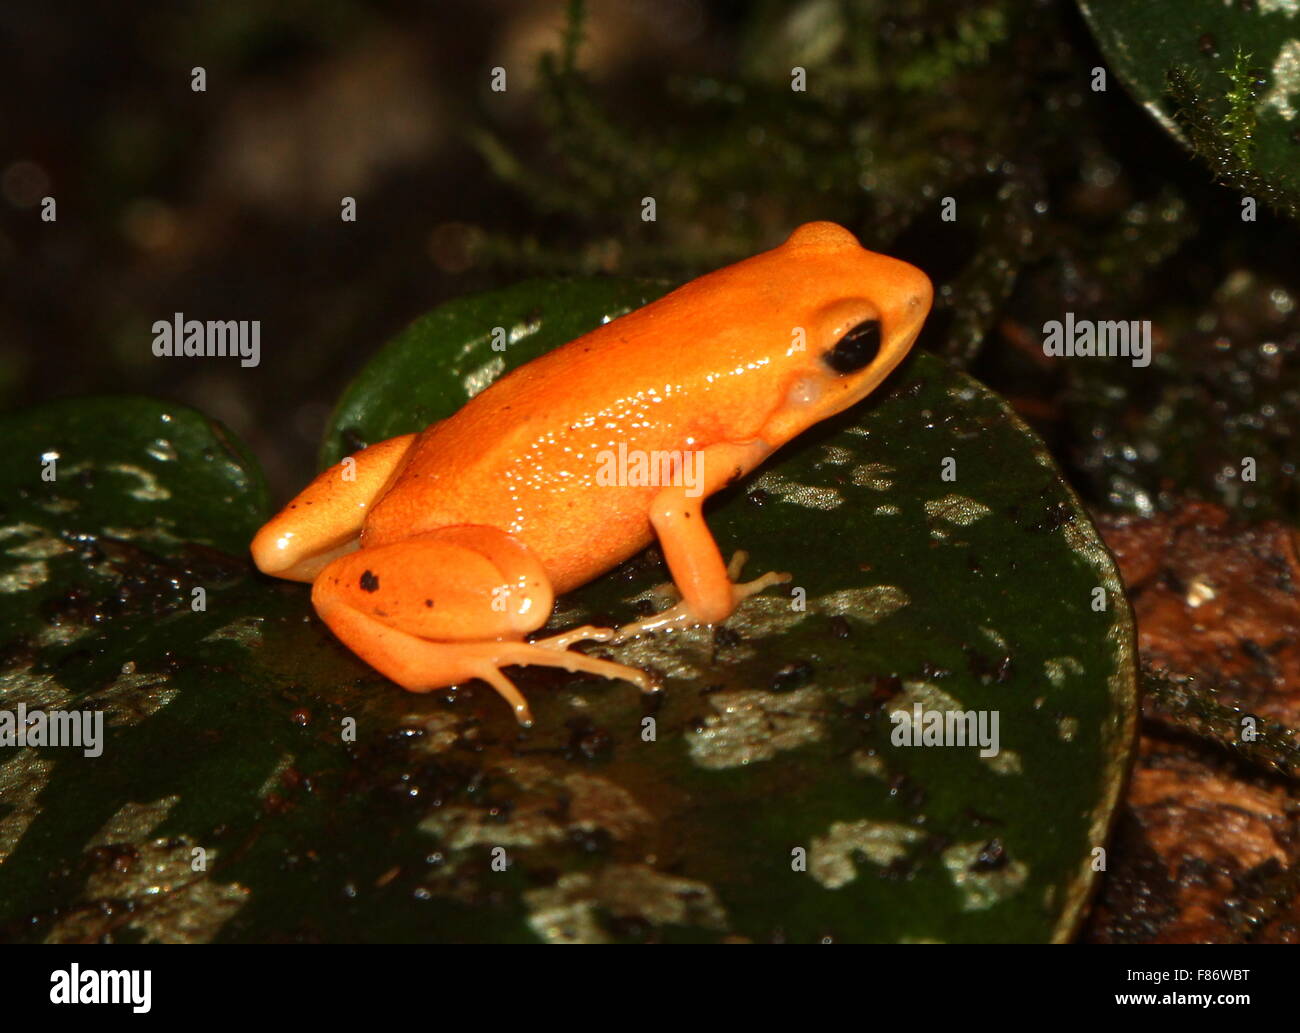 Endangered poisonous Madagascan Golden Mantella frog (Mantella aurantiaca) Stock Photo